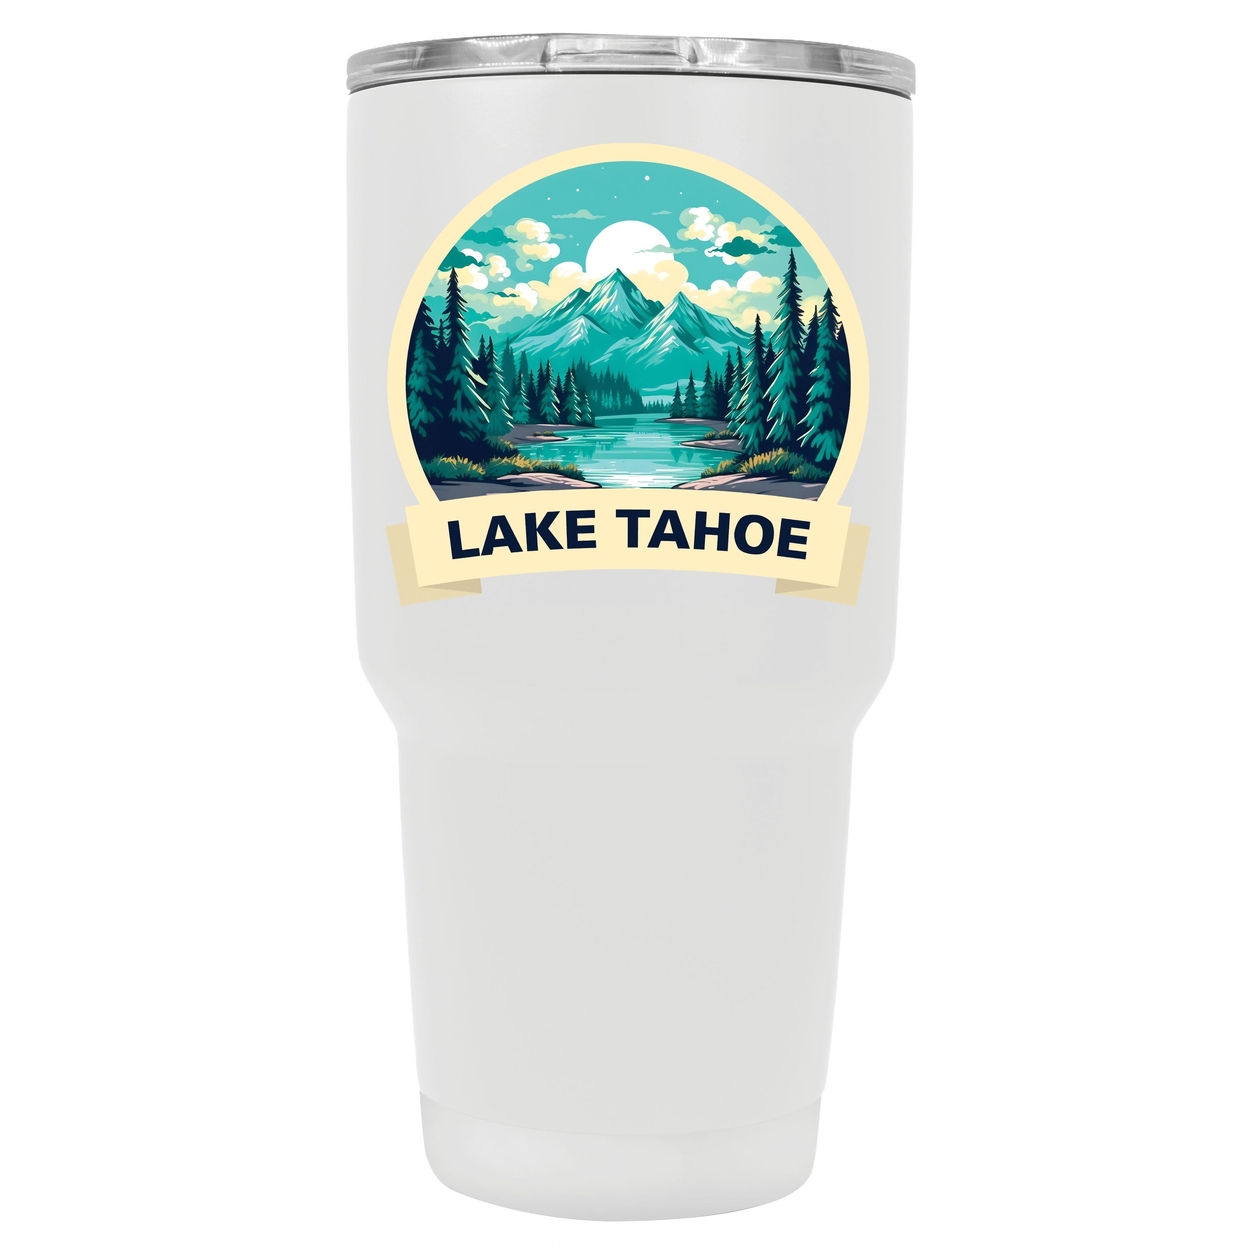 Lake Tahoe California Souvenir 24 Oz Insulated Stainless Steel Tumbler - White,,Single